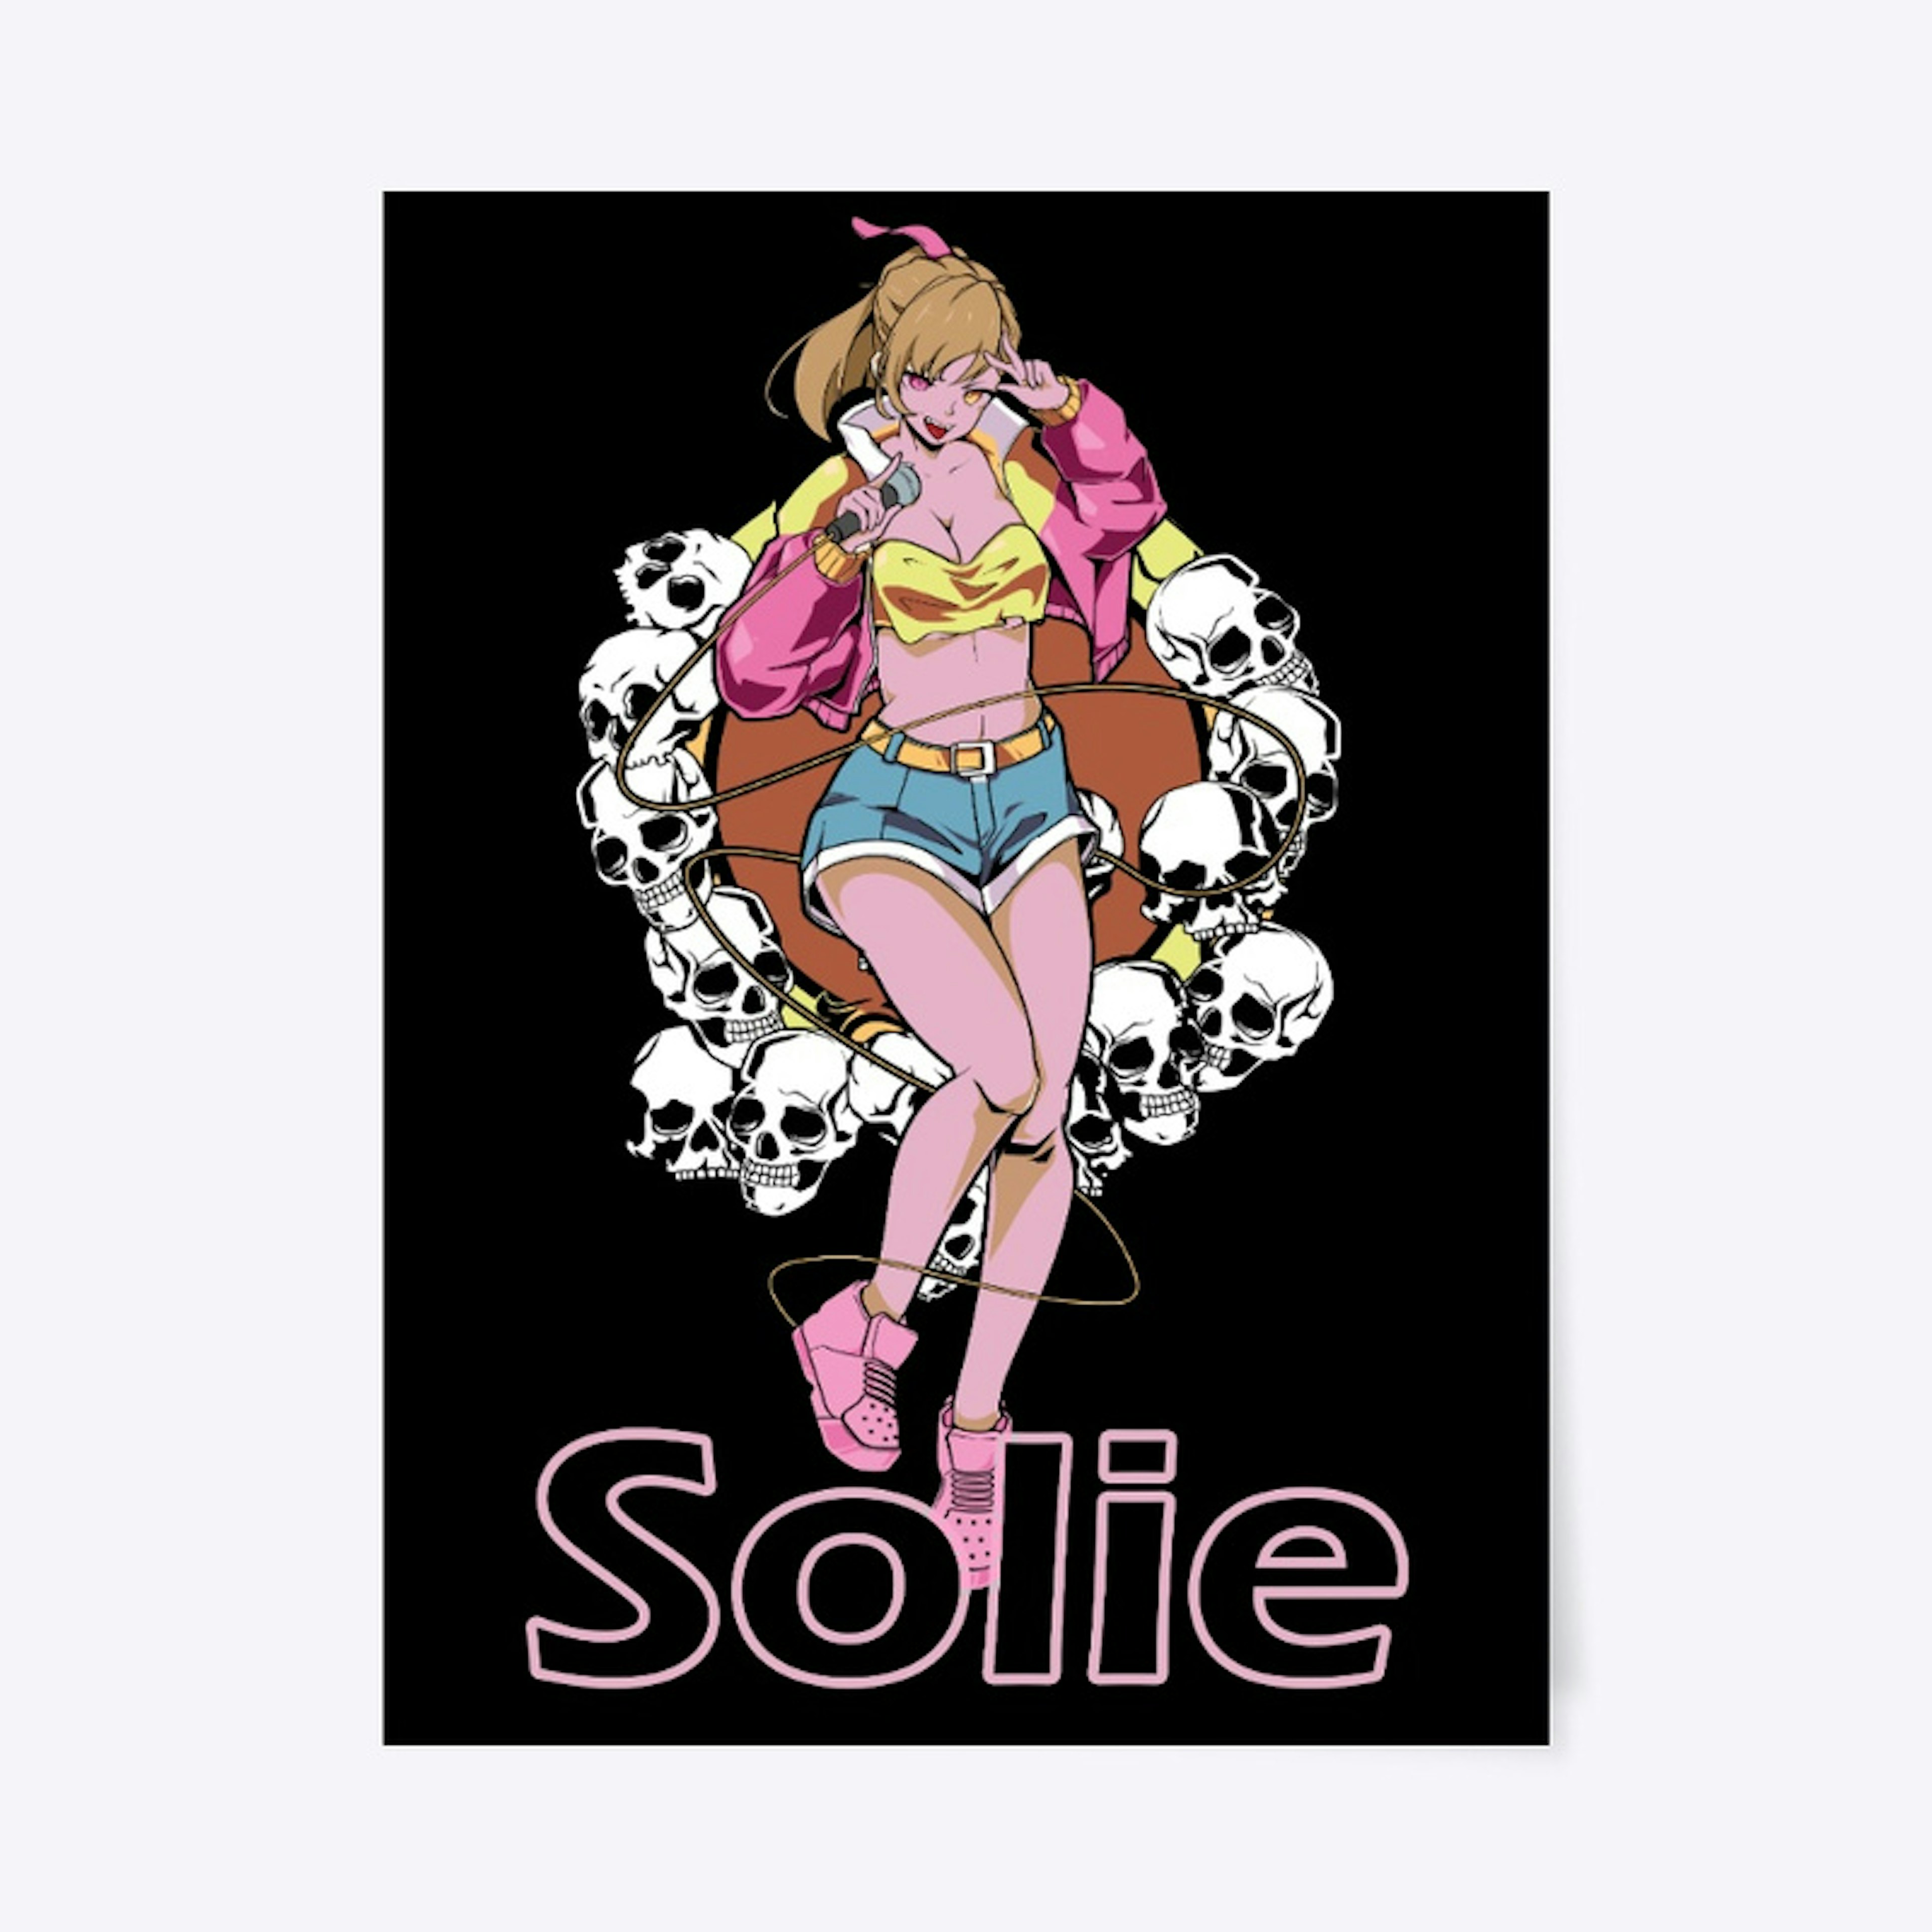 Solie